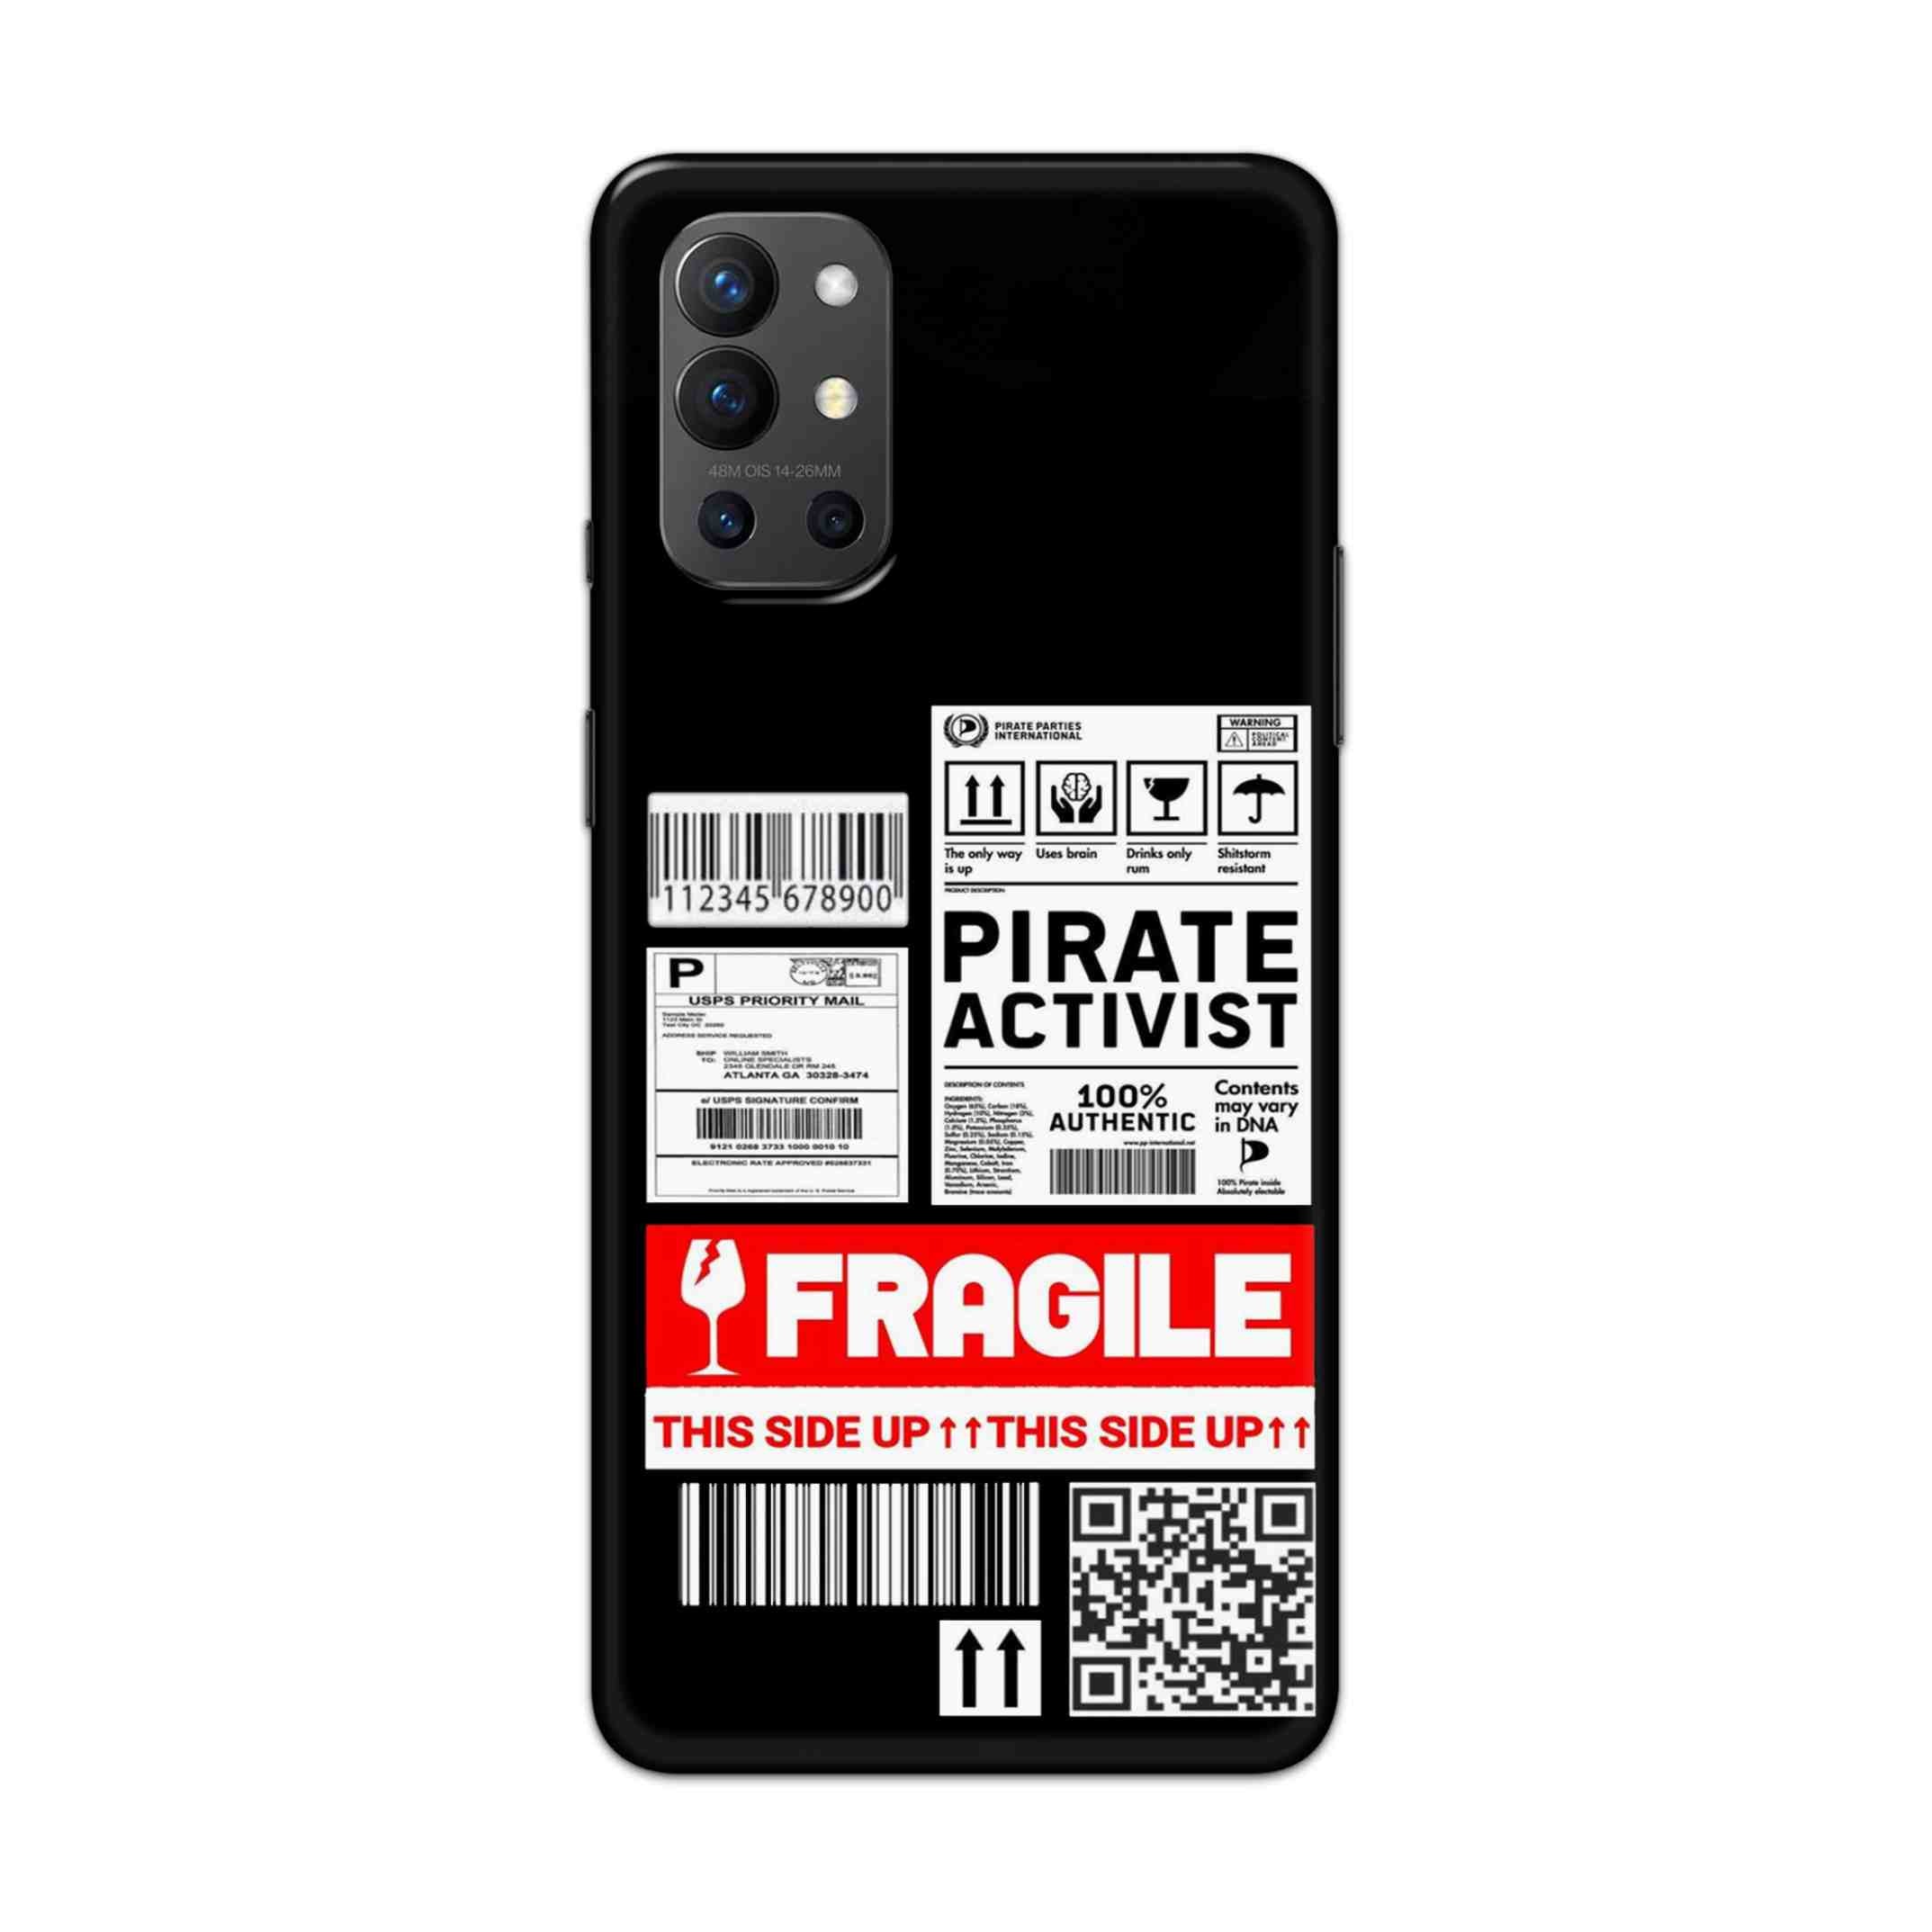 Buy Fragile Hard Back Mobile Phone Case Cover For OnePlus 9R / 8T Online